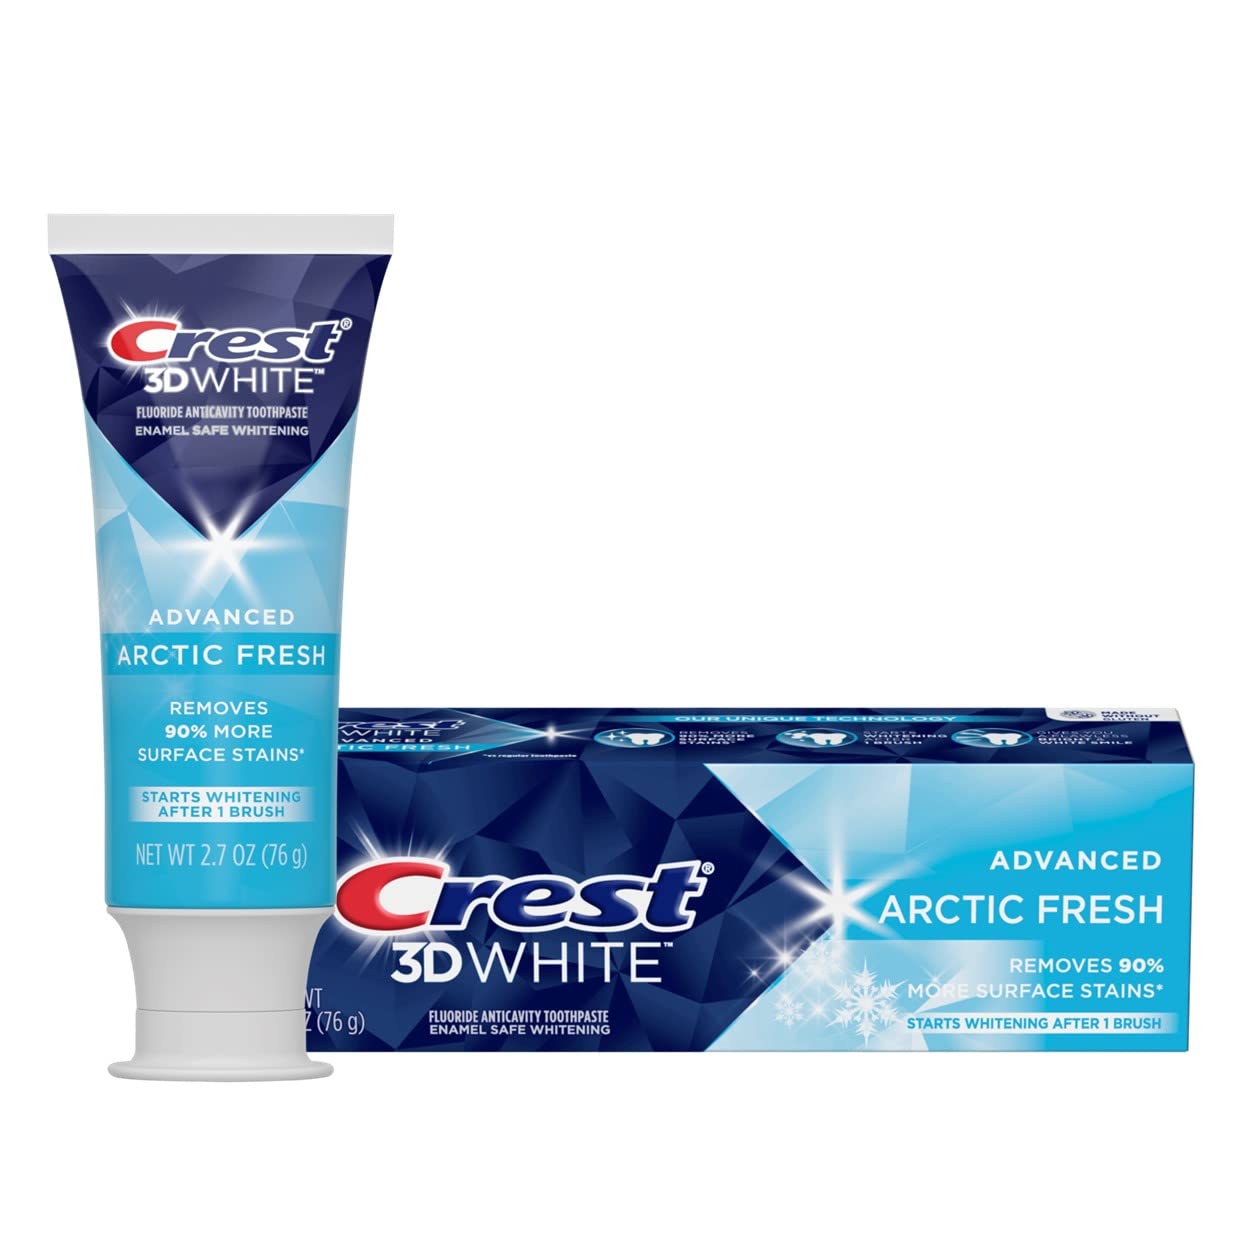 Crest 3D White Arctic Fresh Teeth Whitening Toothpaste, 2.7 oz